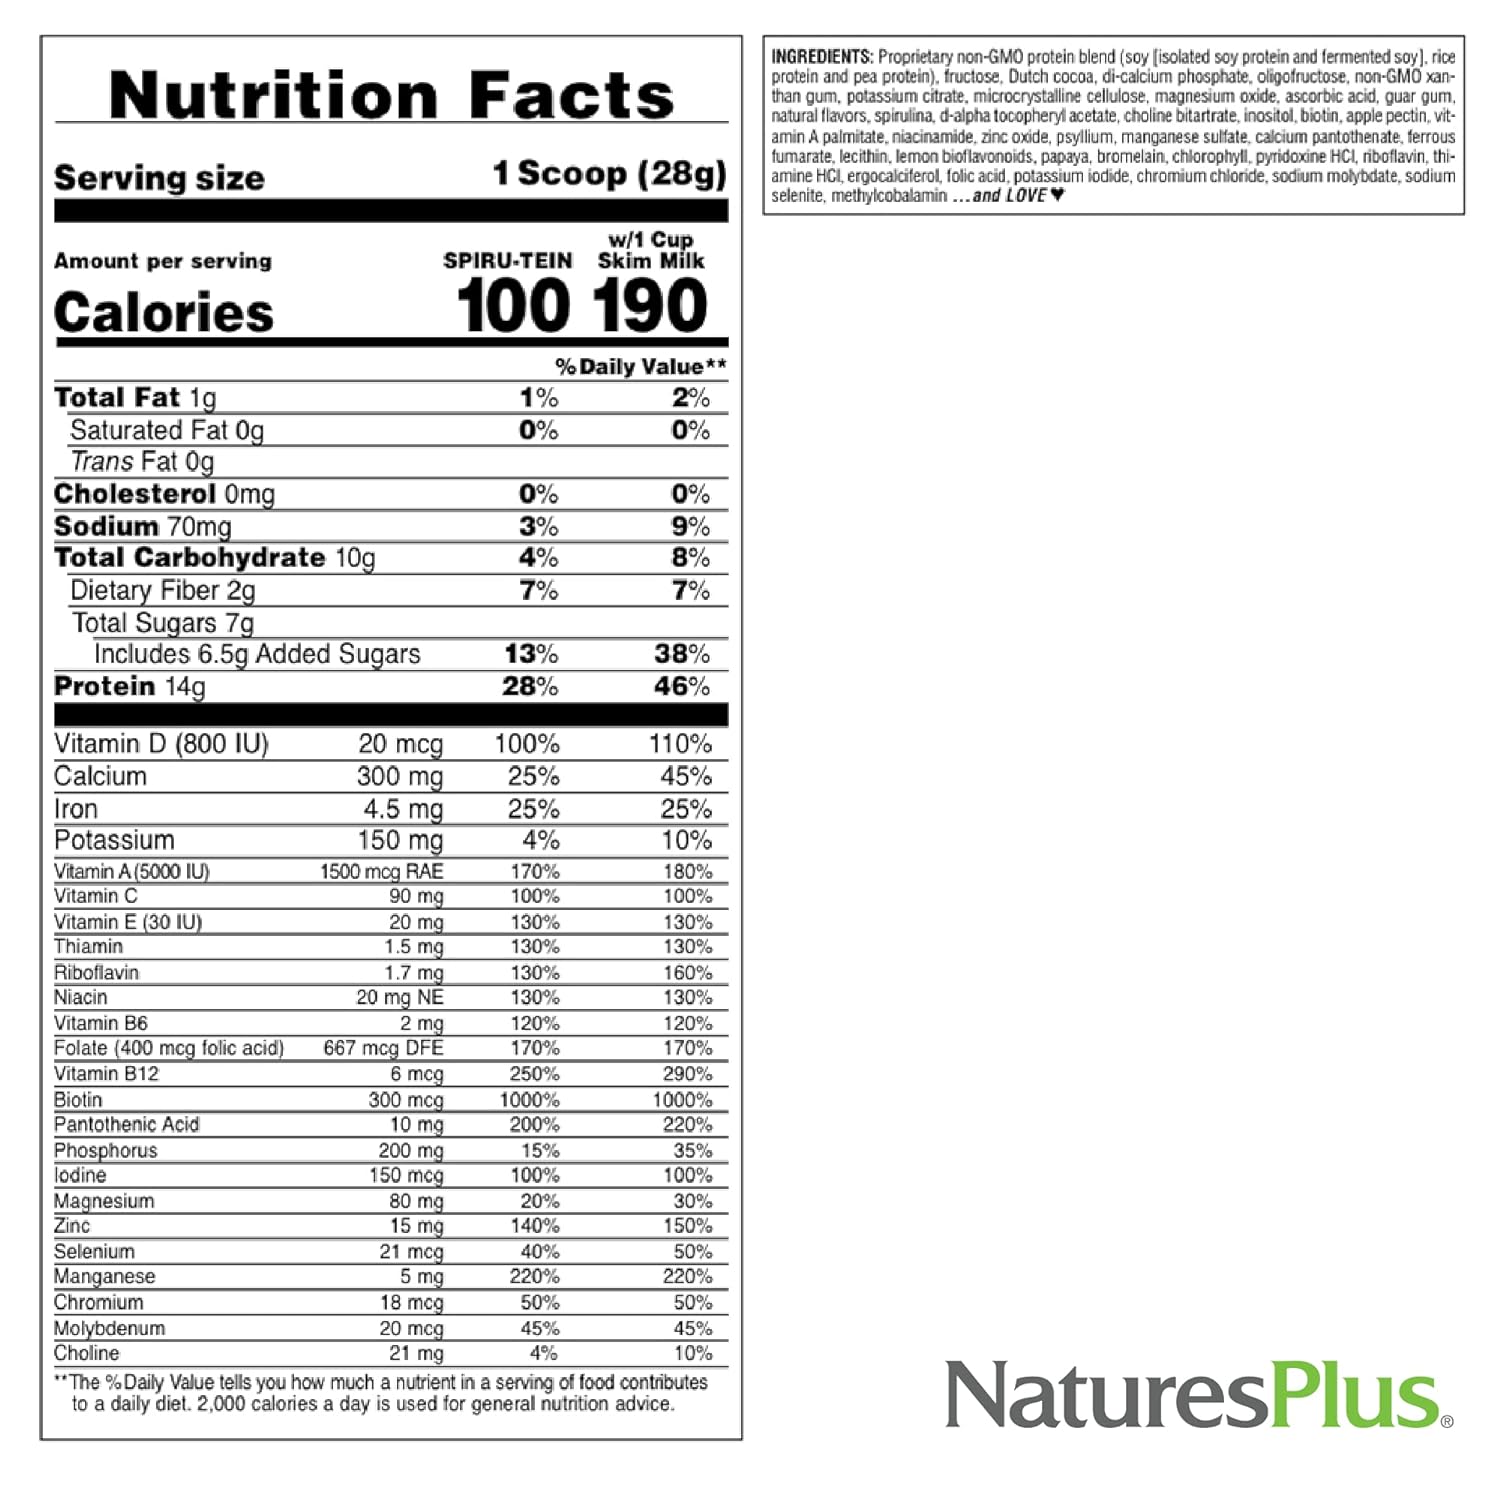 NaturesPlus SPIRU-TEIN, Chocolate - 2.1 lb, Pack of 2 - Plant-Based Pr